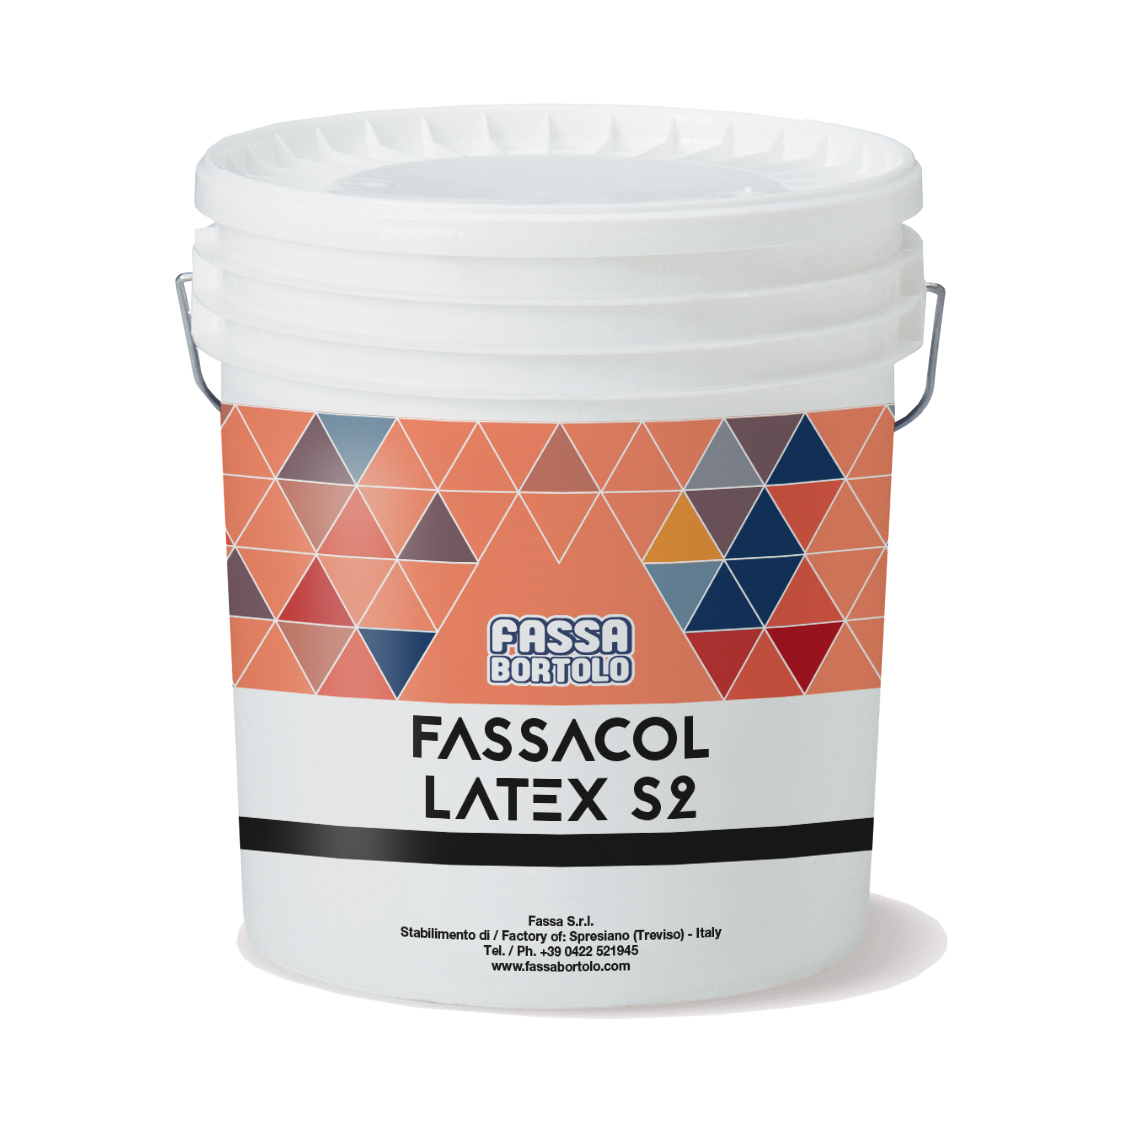 FASSACOL LATEX S2: Látex super-elástico para cimentos-cola